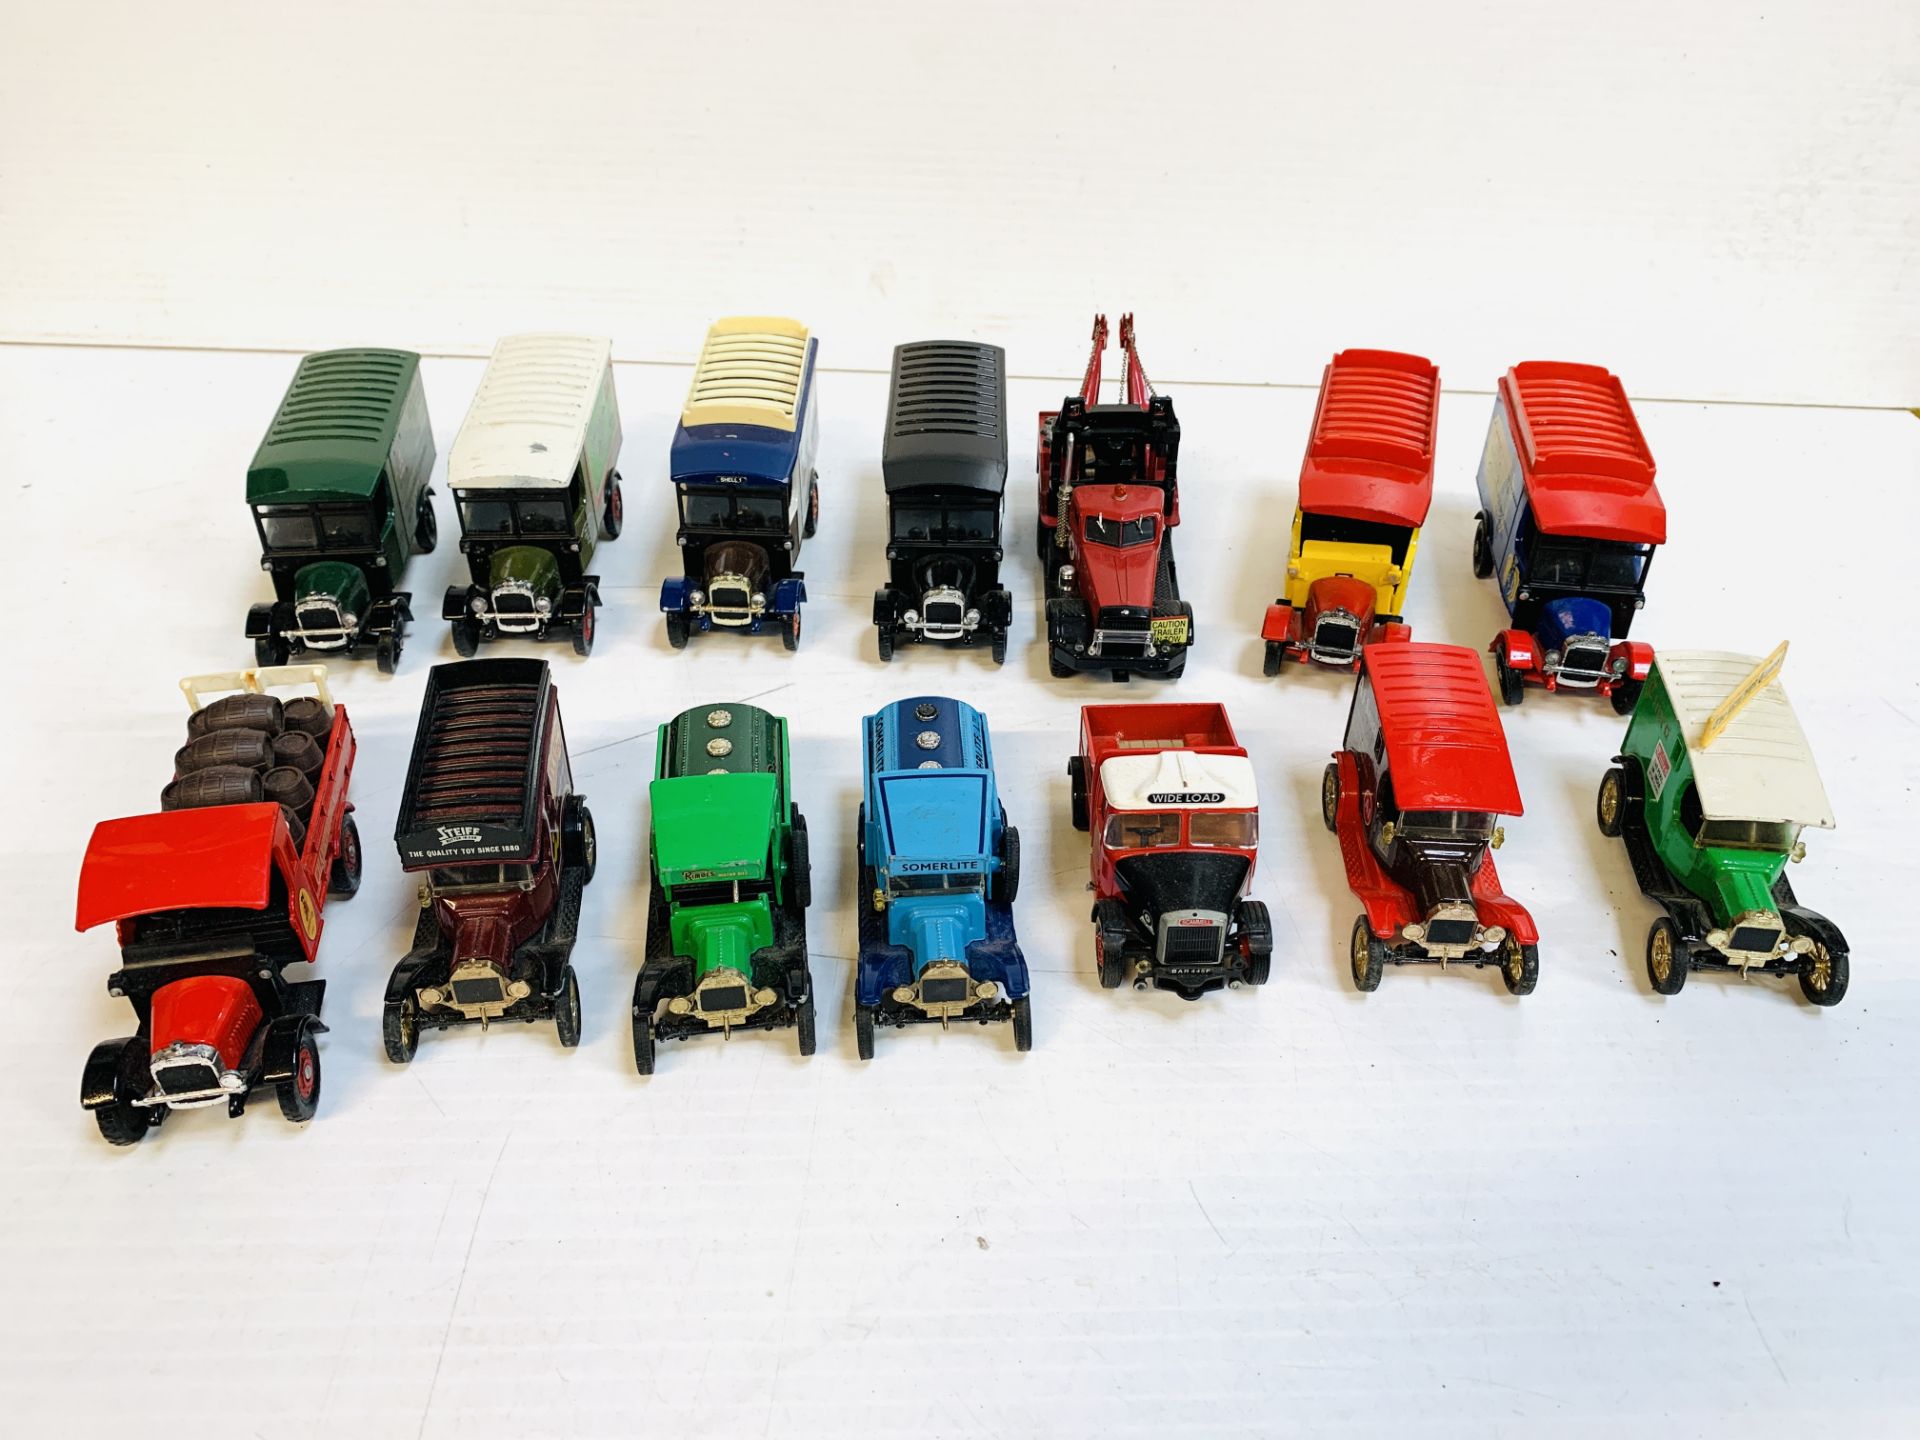 Fourteen Corgi model lorries and vans